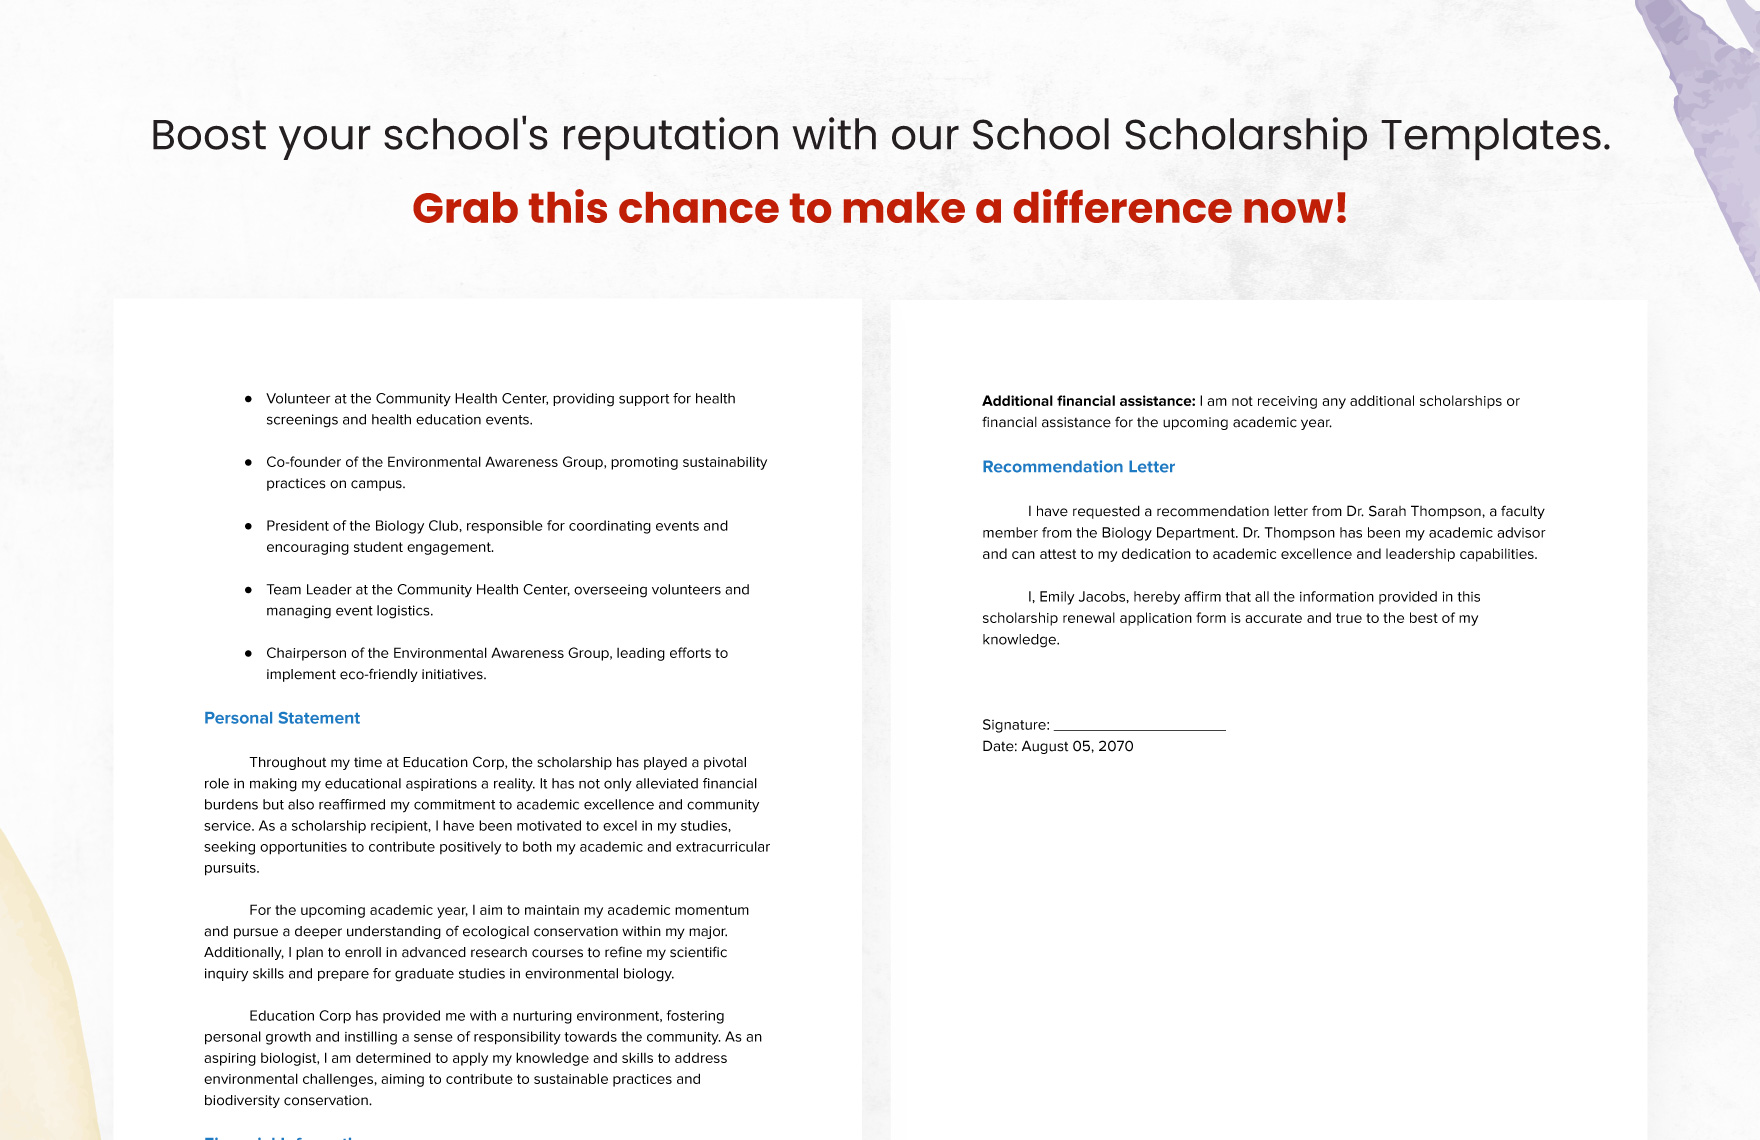 Education Scholarship Renewal Form Template